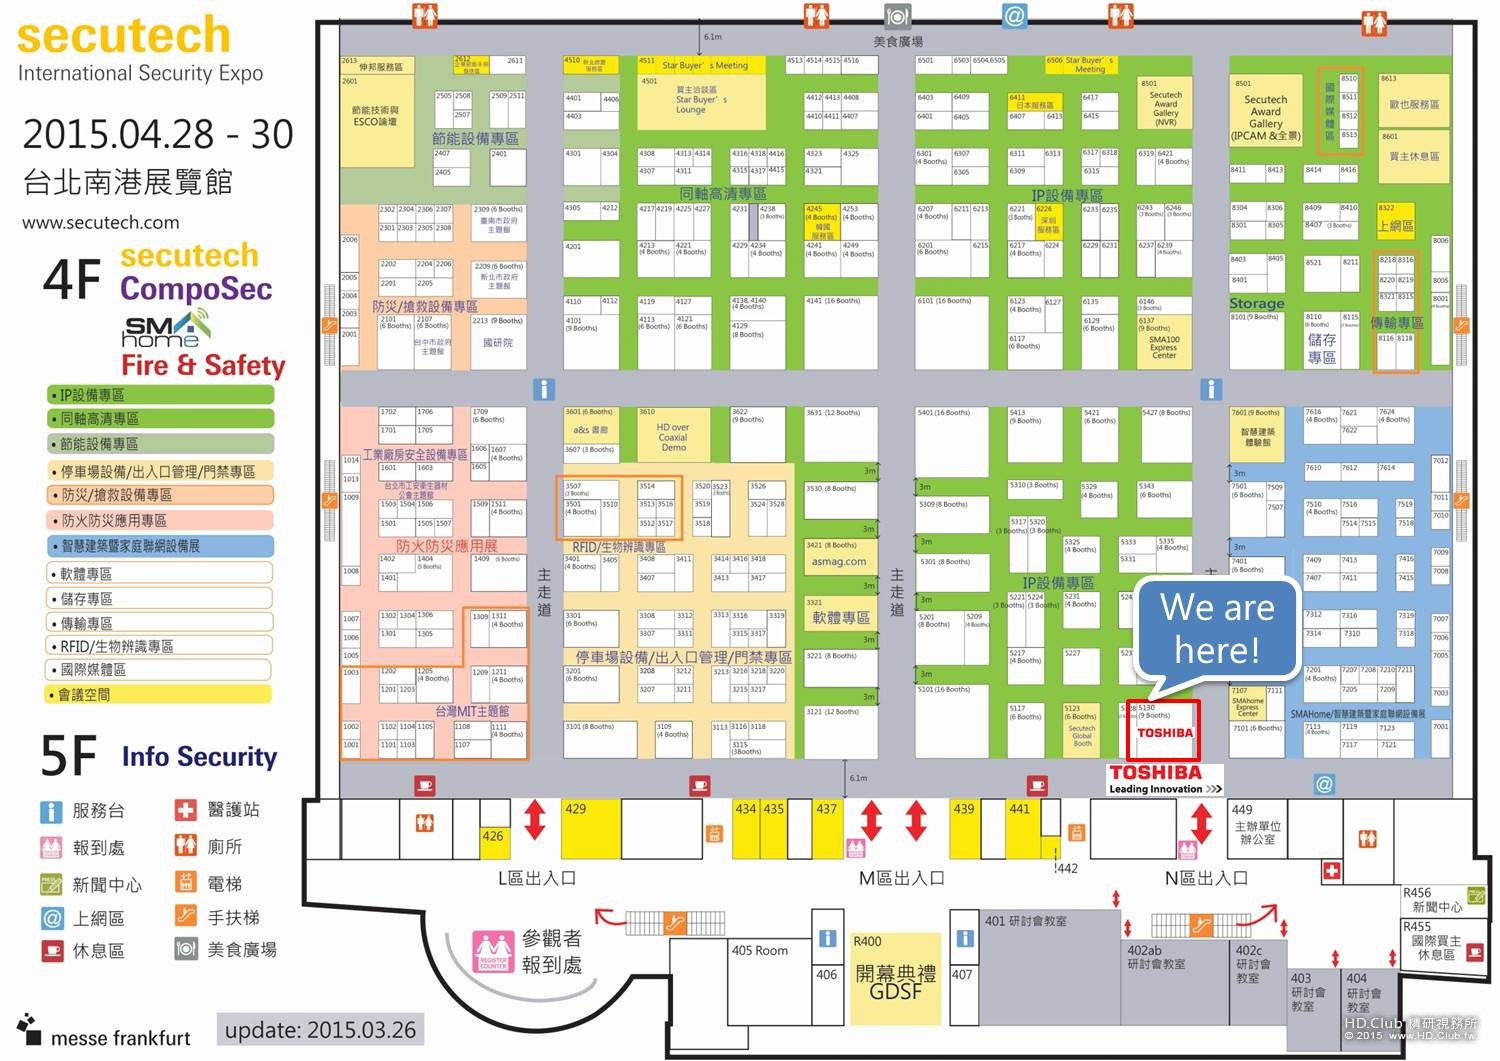 1. Toshiba 2015 Secutech 台北國際安全博覽會 展場位置圖。.jpg